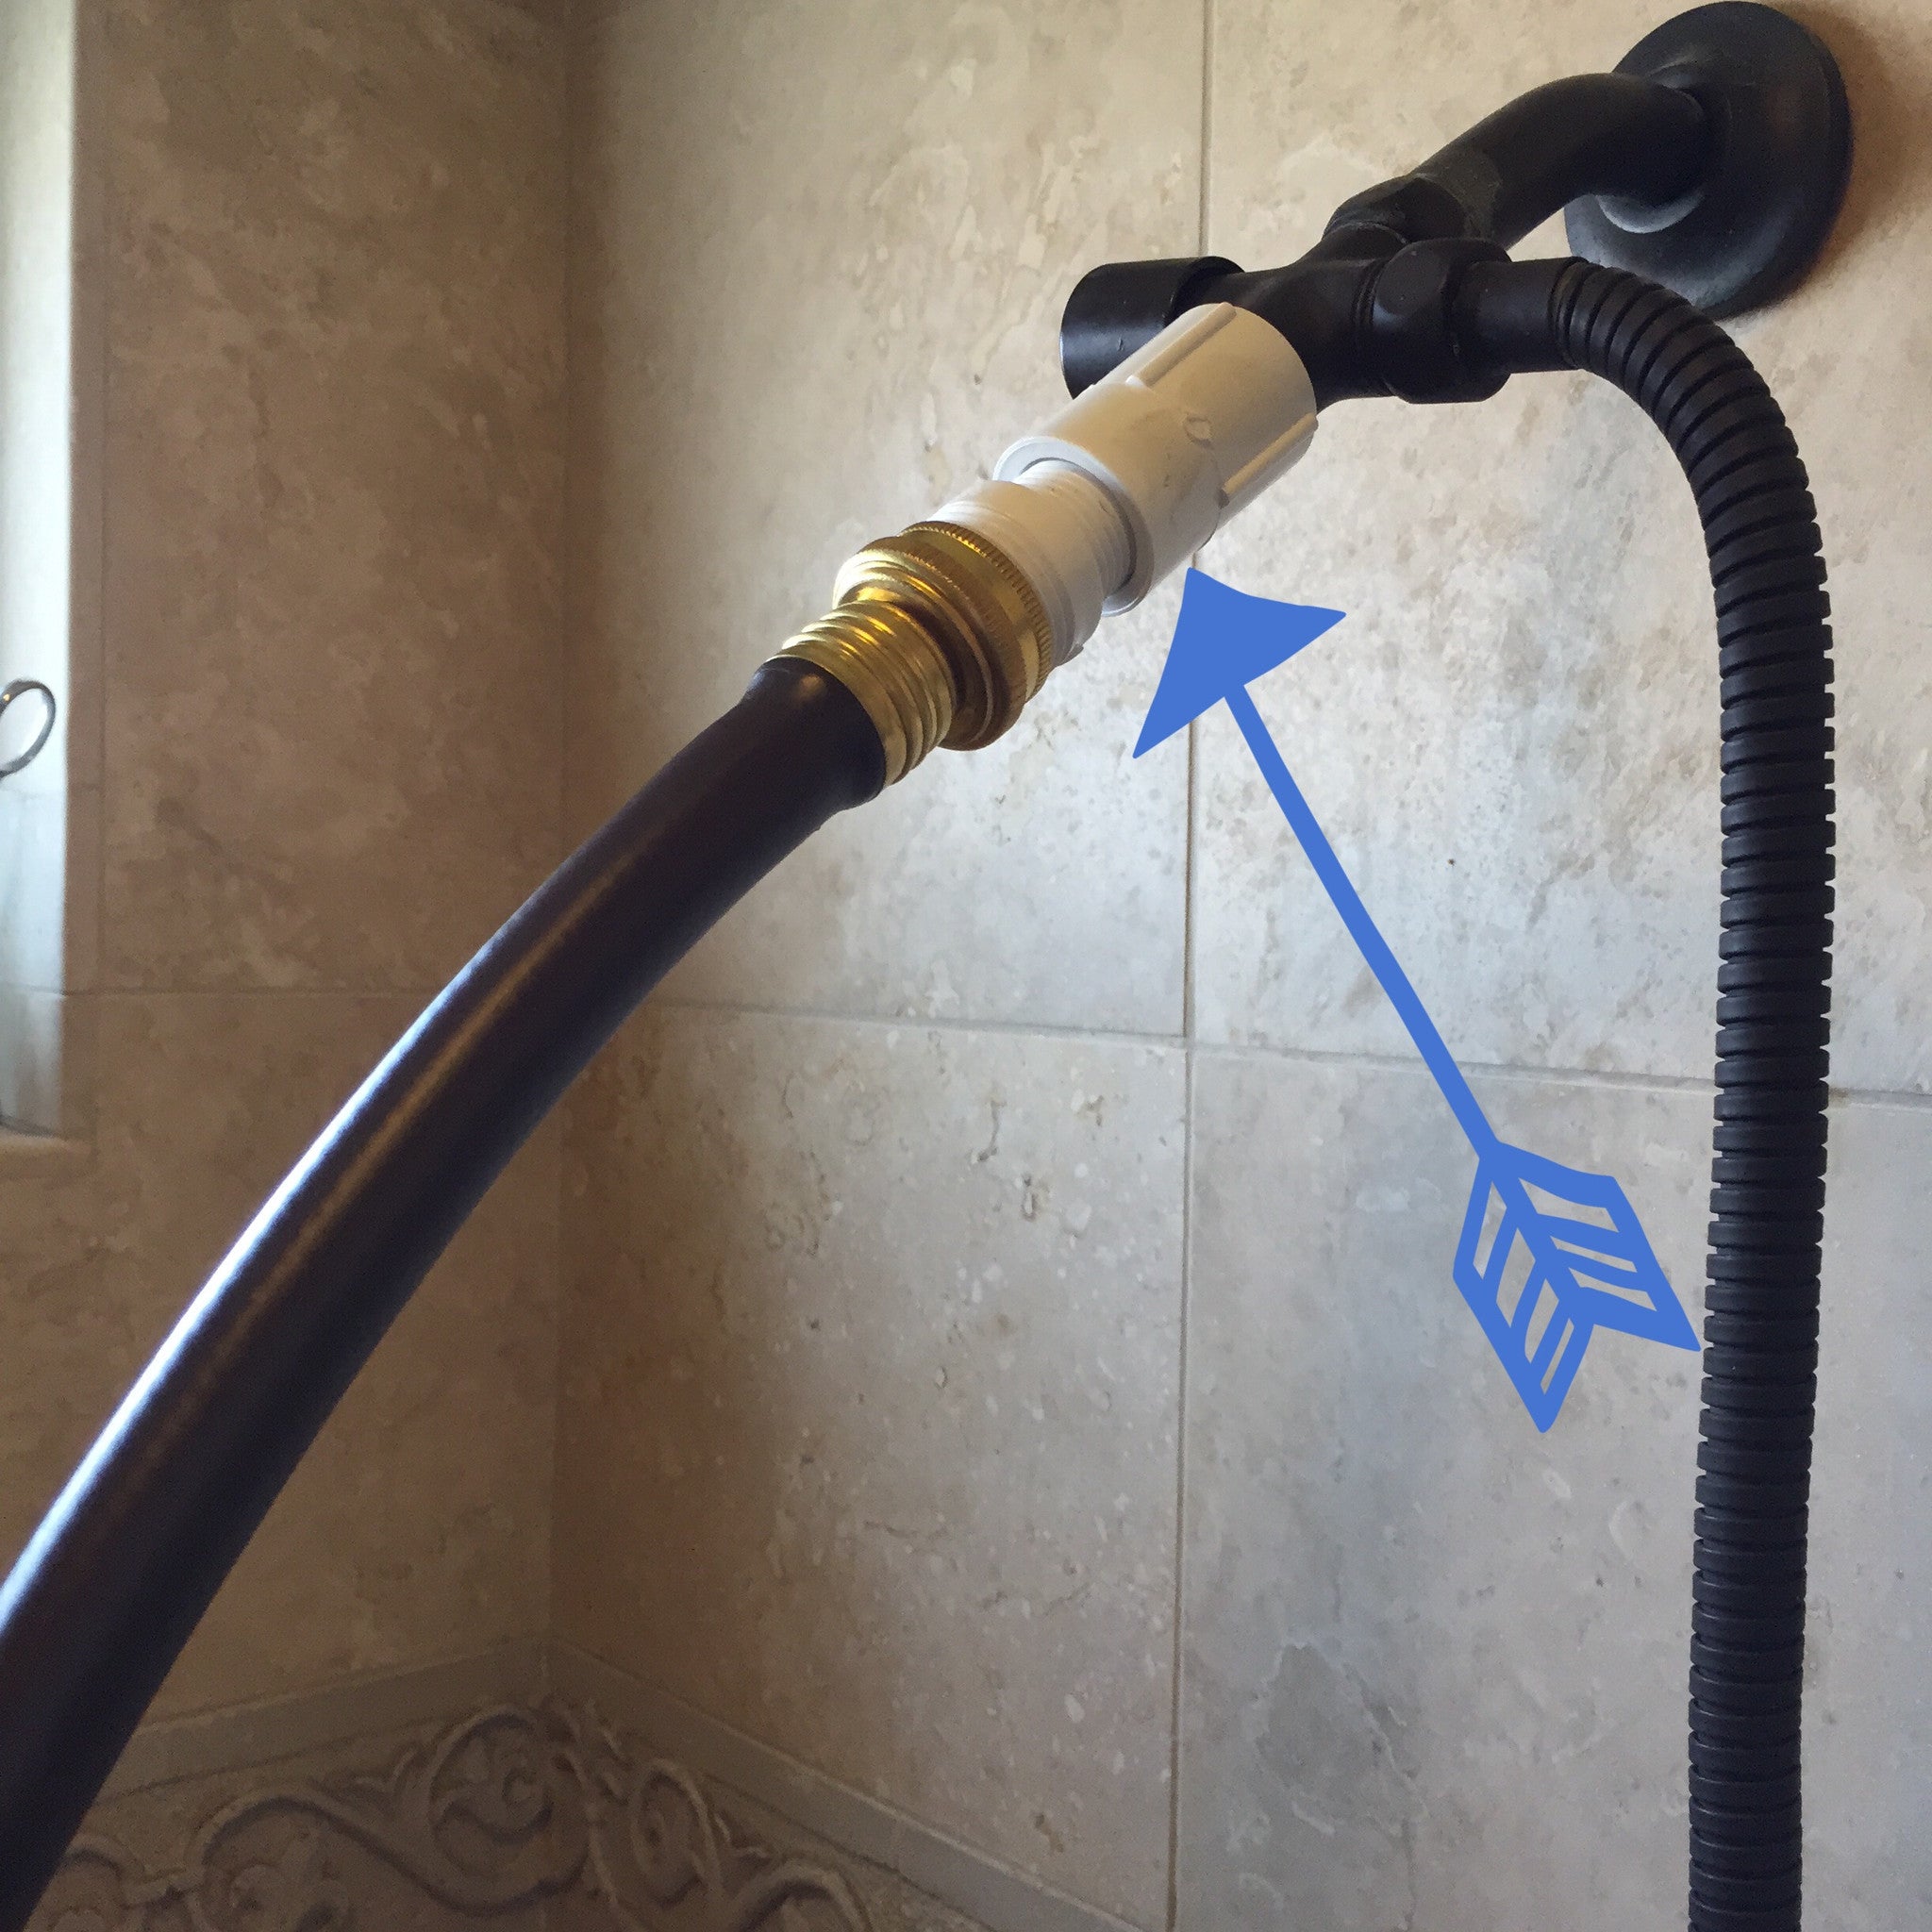 Hose / Shower Faucet Adapter